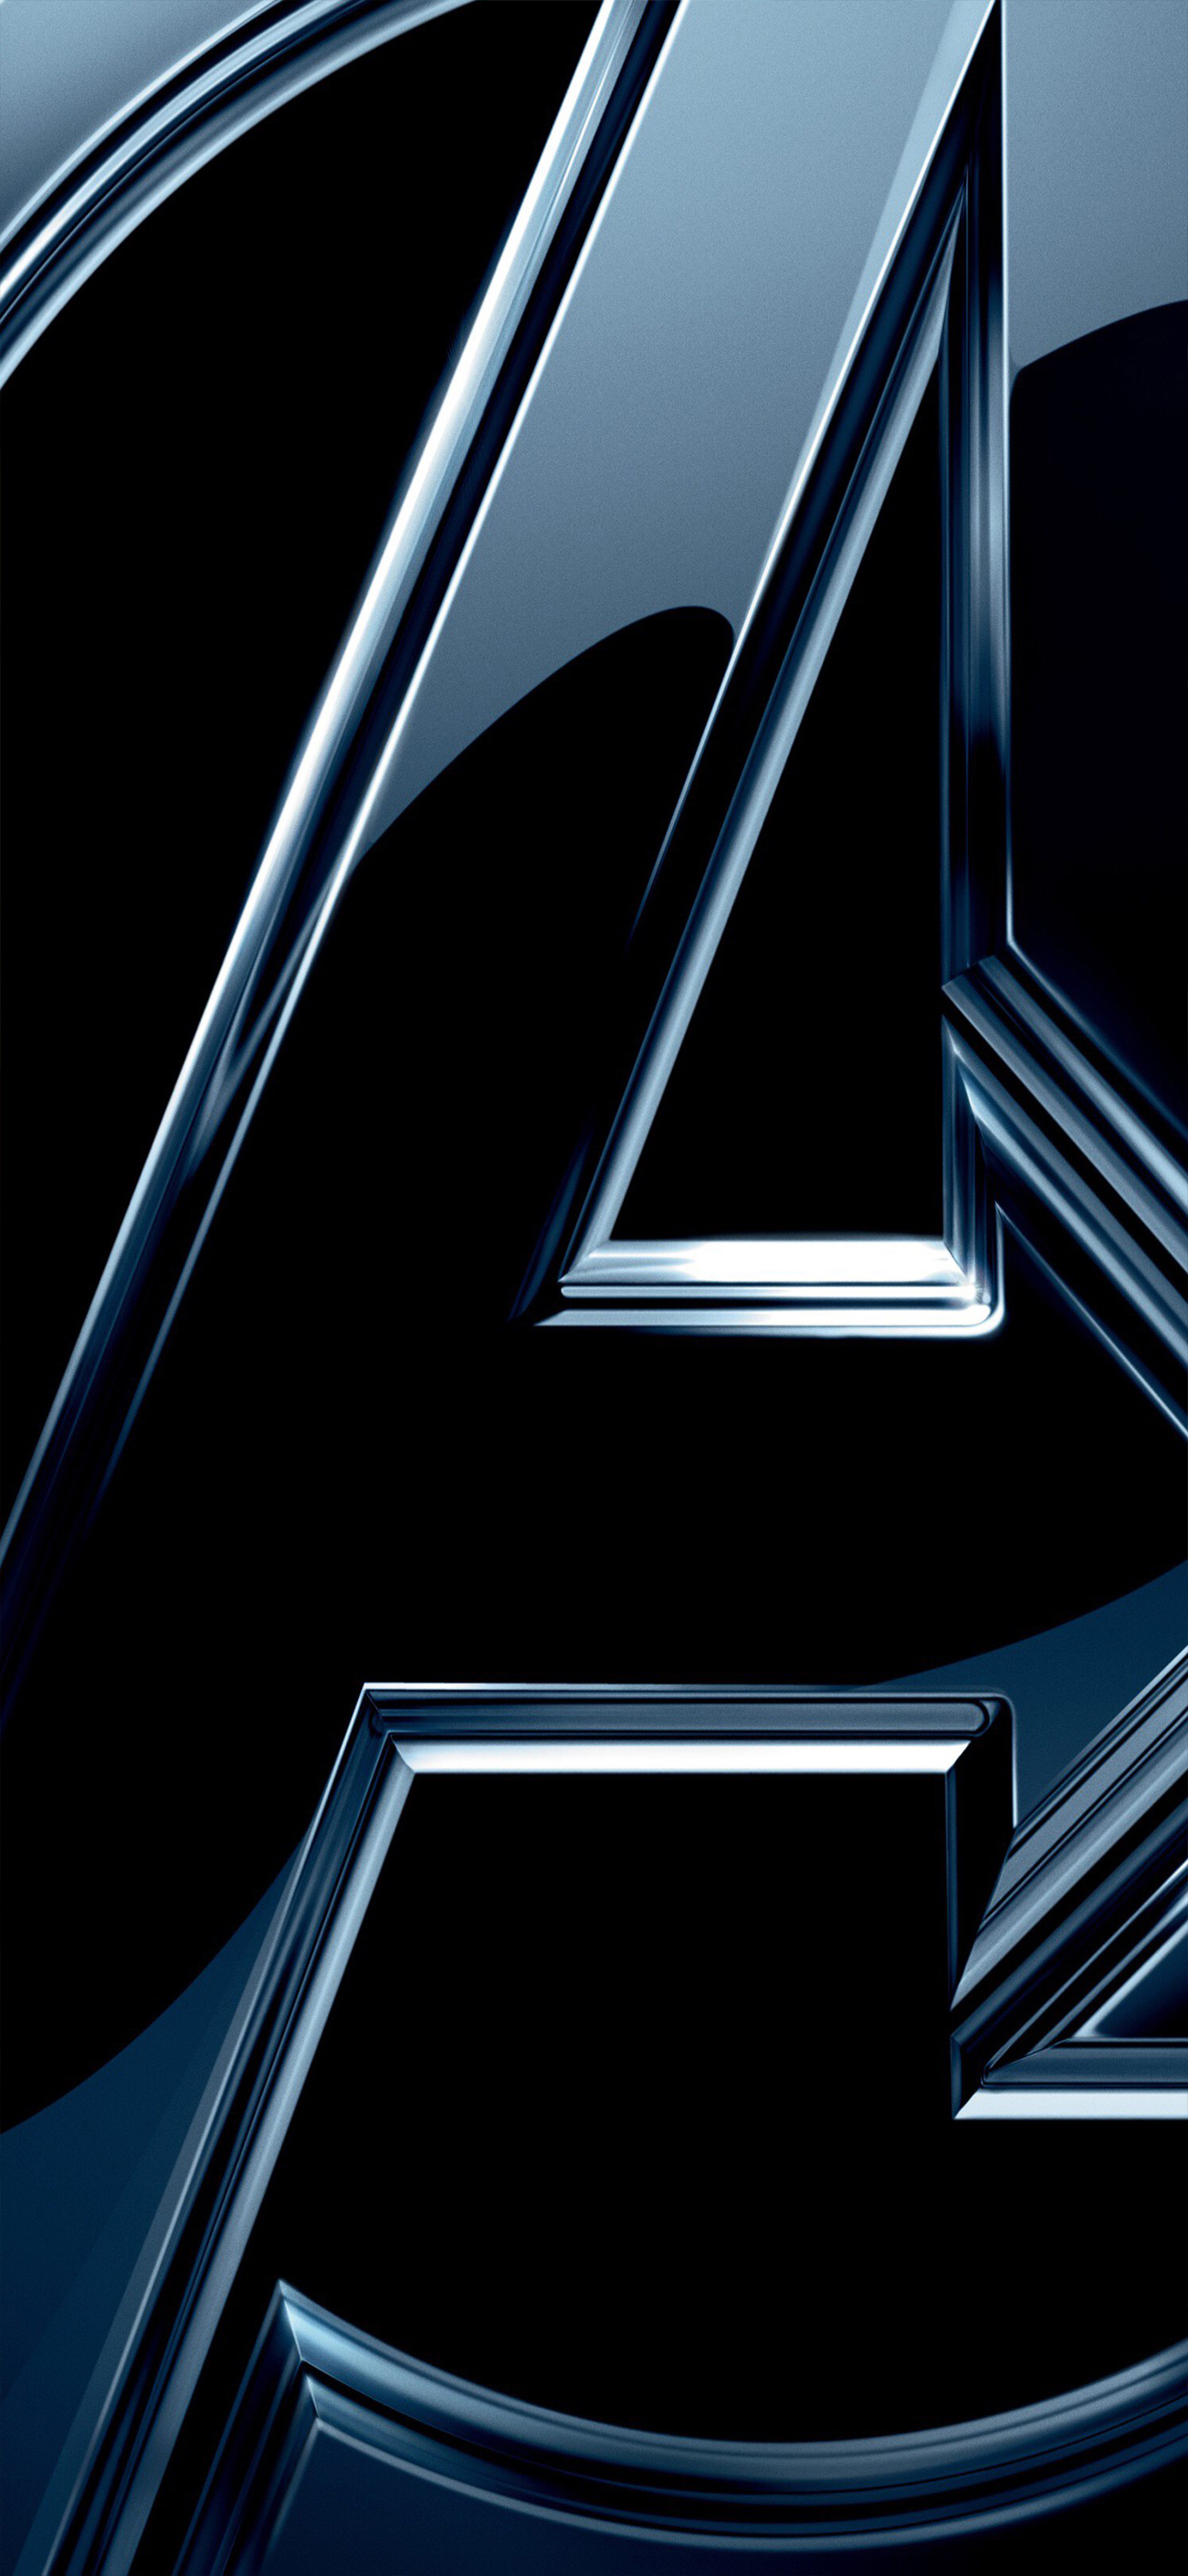 Avengers Logo Design wallpaper by RameezCreations - Download on ZEDGE™ |  bd58